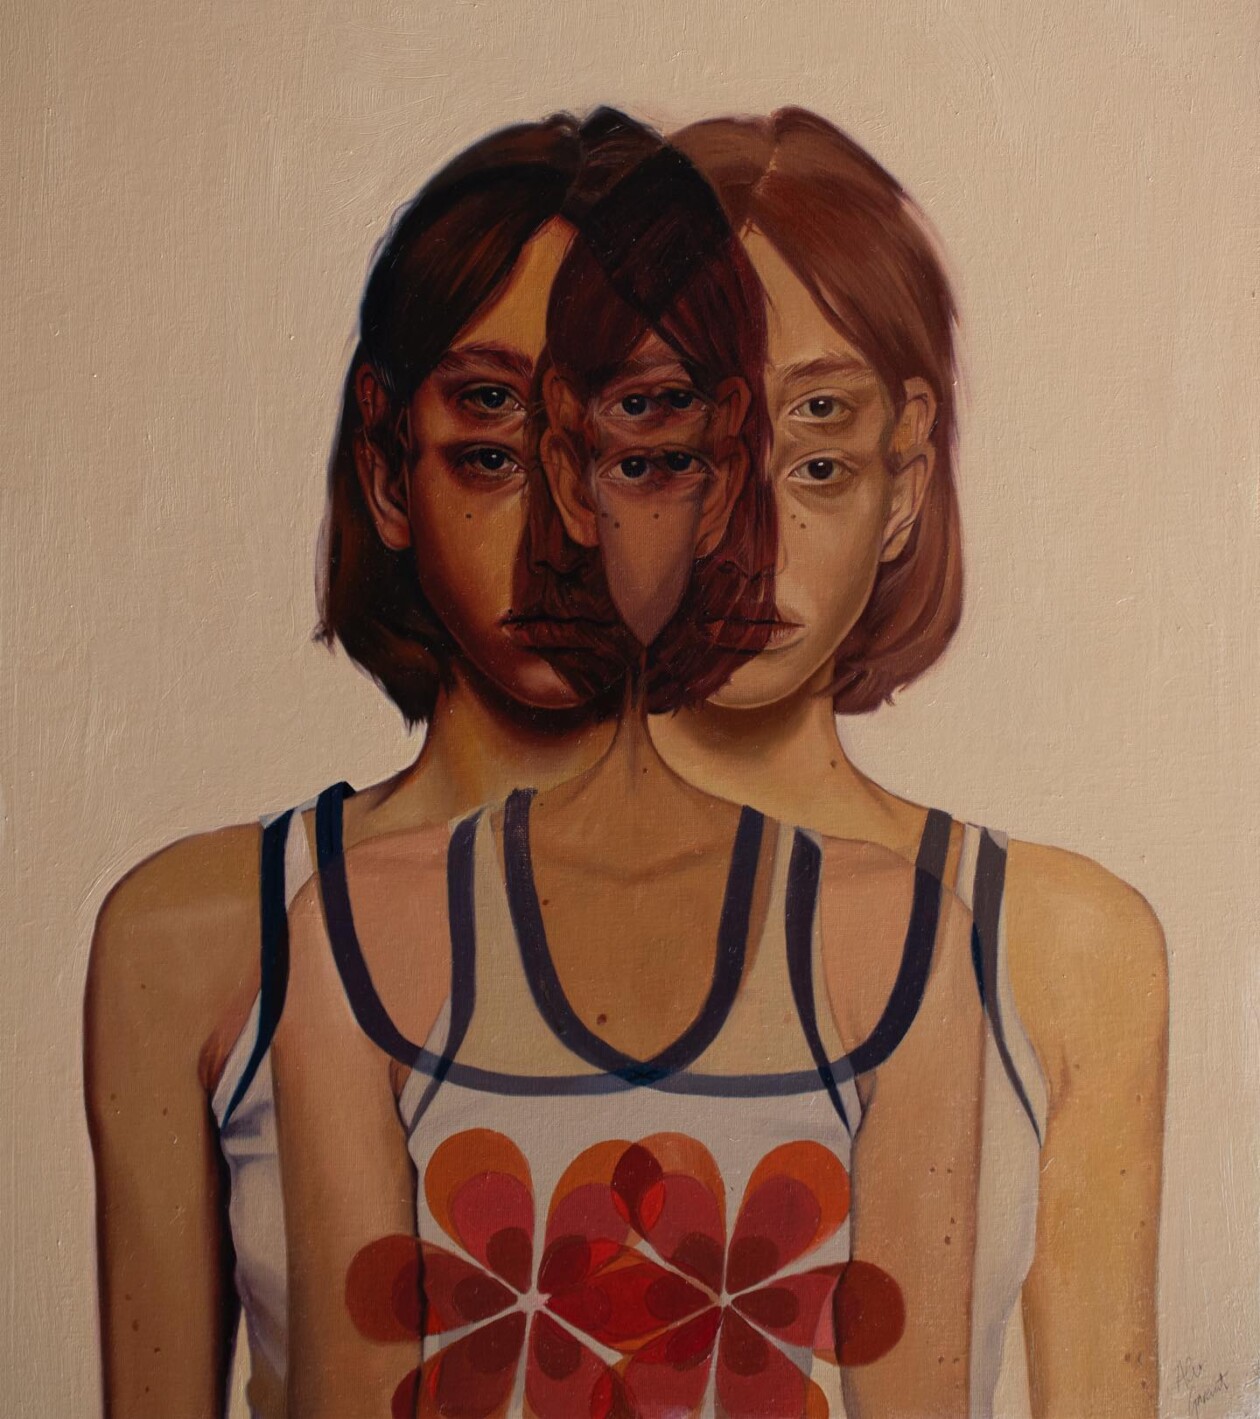 Alex Garant Overlaps Repeated Female Figures To Create Unique And Hypnotizing Portrait Paintings (12)